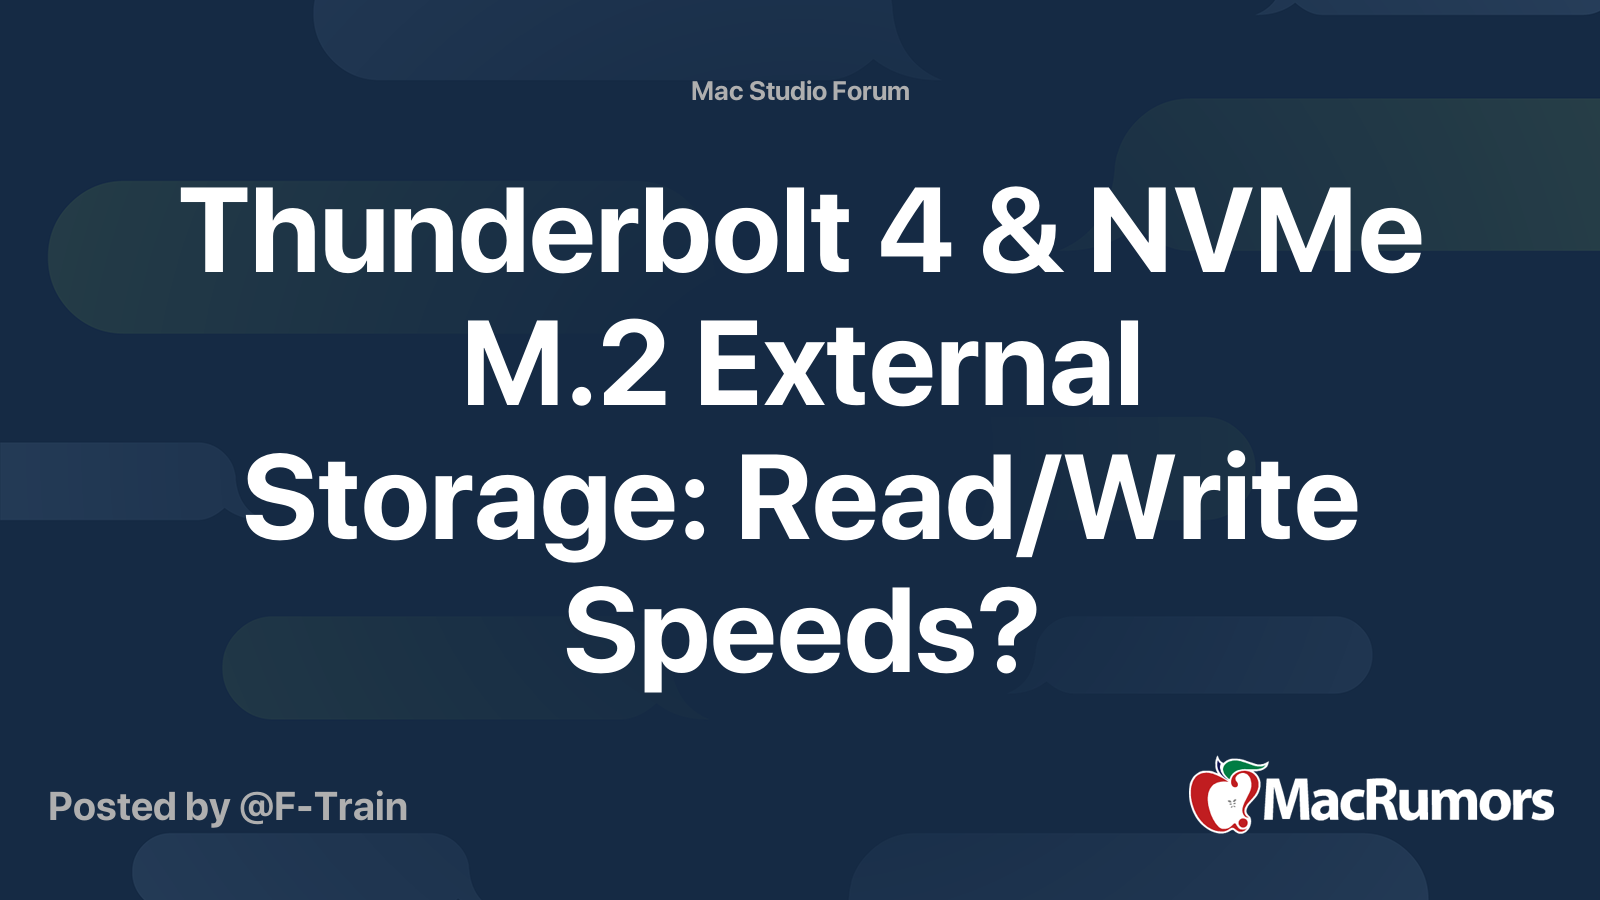 Thunderbolt 4 & NVMe M.2 External Storage: Read/Write Speeds?